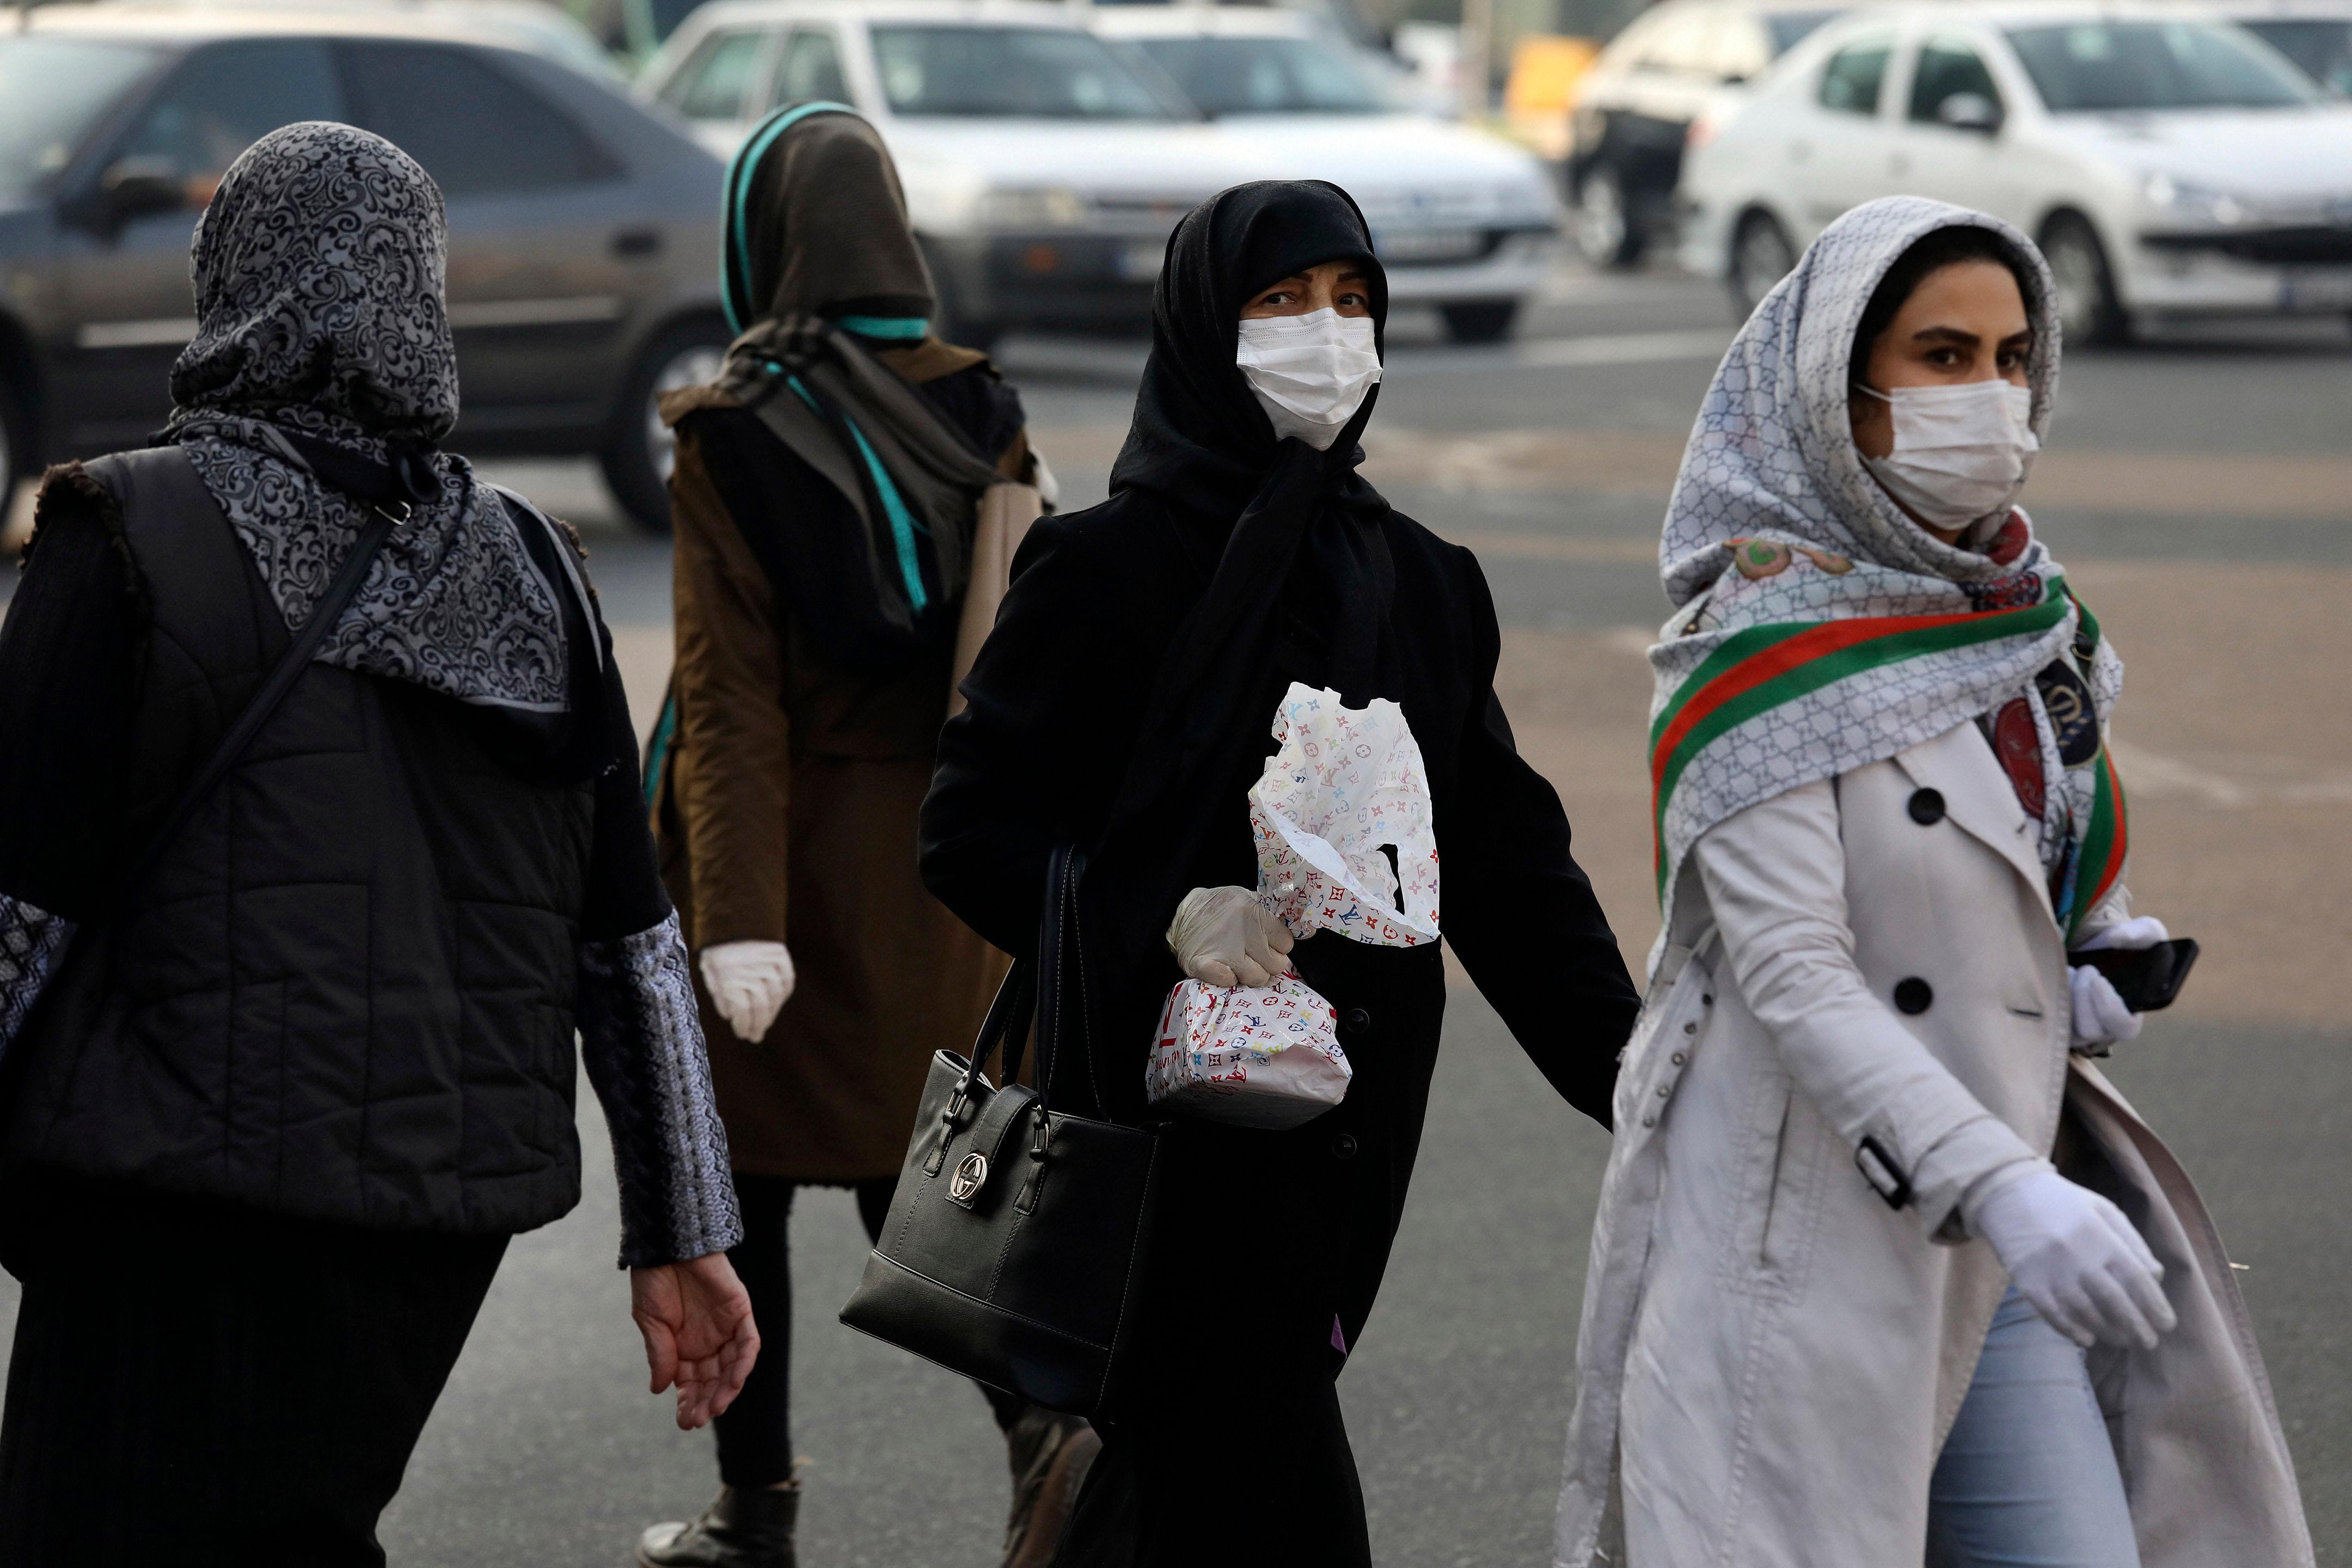 Azerbaijan, Iraq, Canada, Georgia, Lebanon, New Zealand and Qatar have now confirmed coronavirus infections among people arriving from Iran. (Credit: AP Photo)